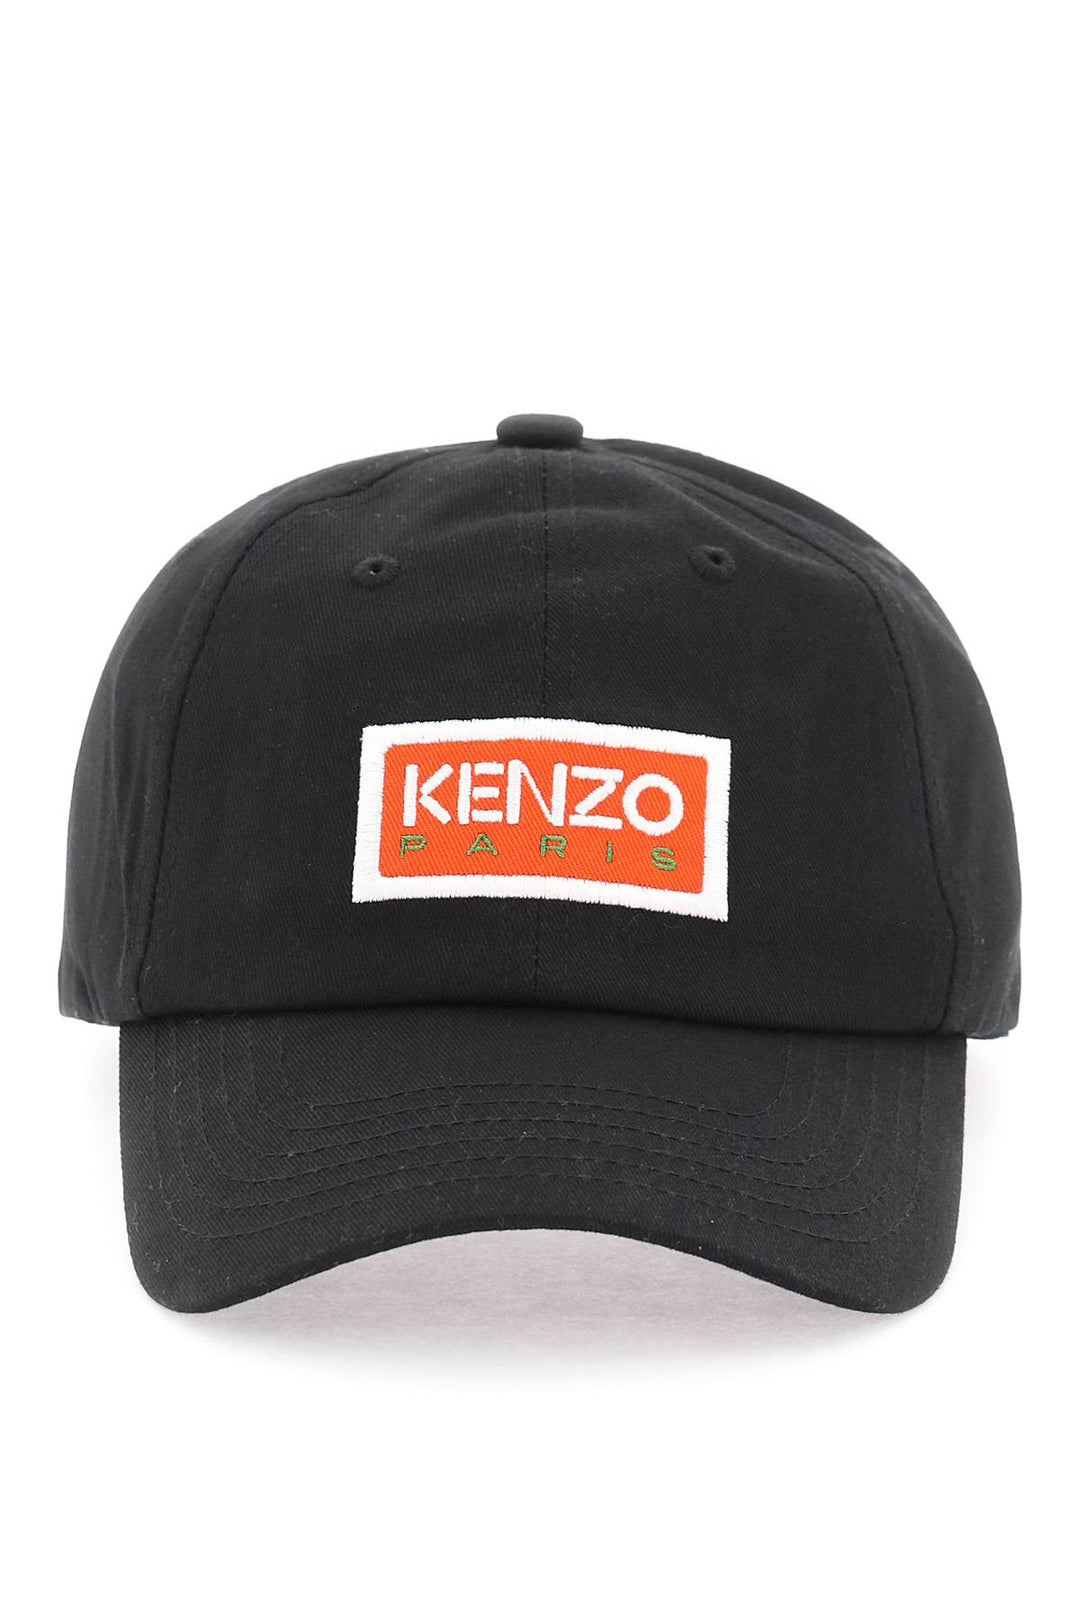 Kenzo Logo Baseball Cap   Nero